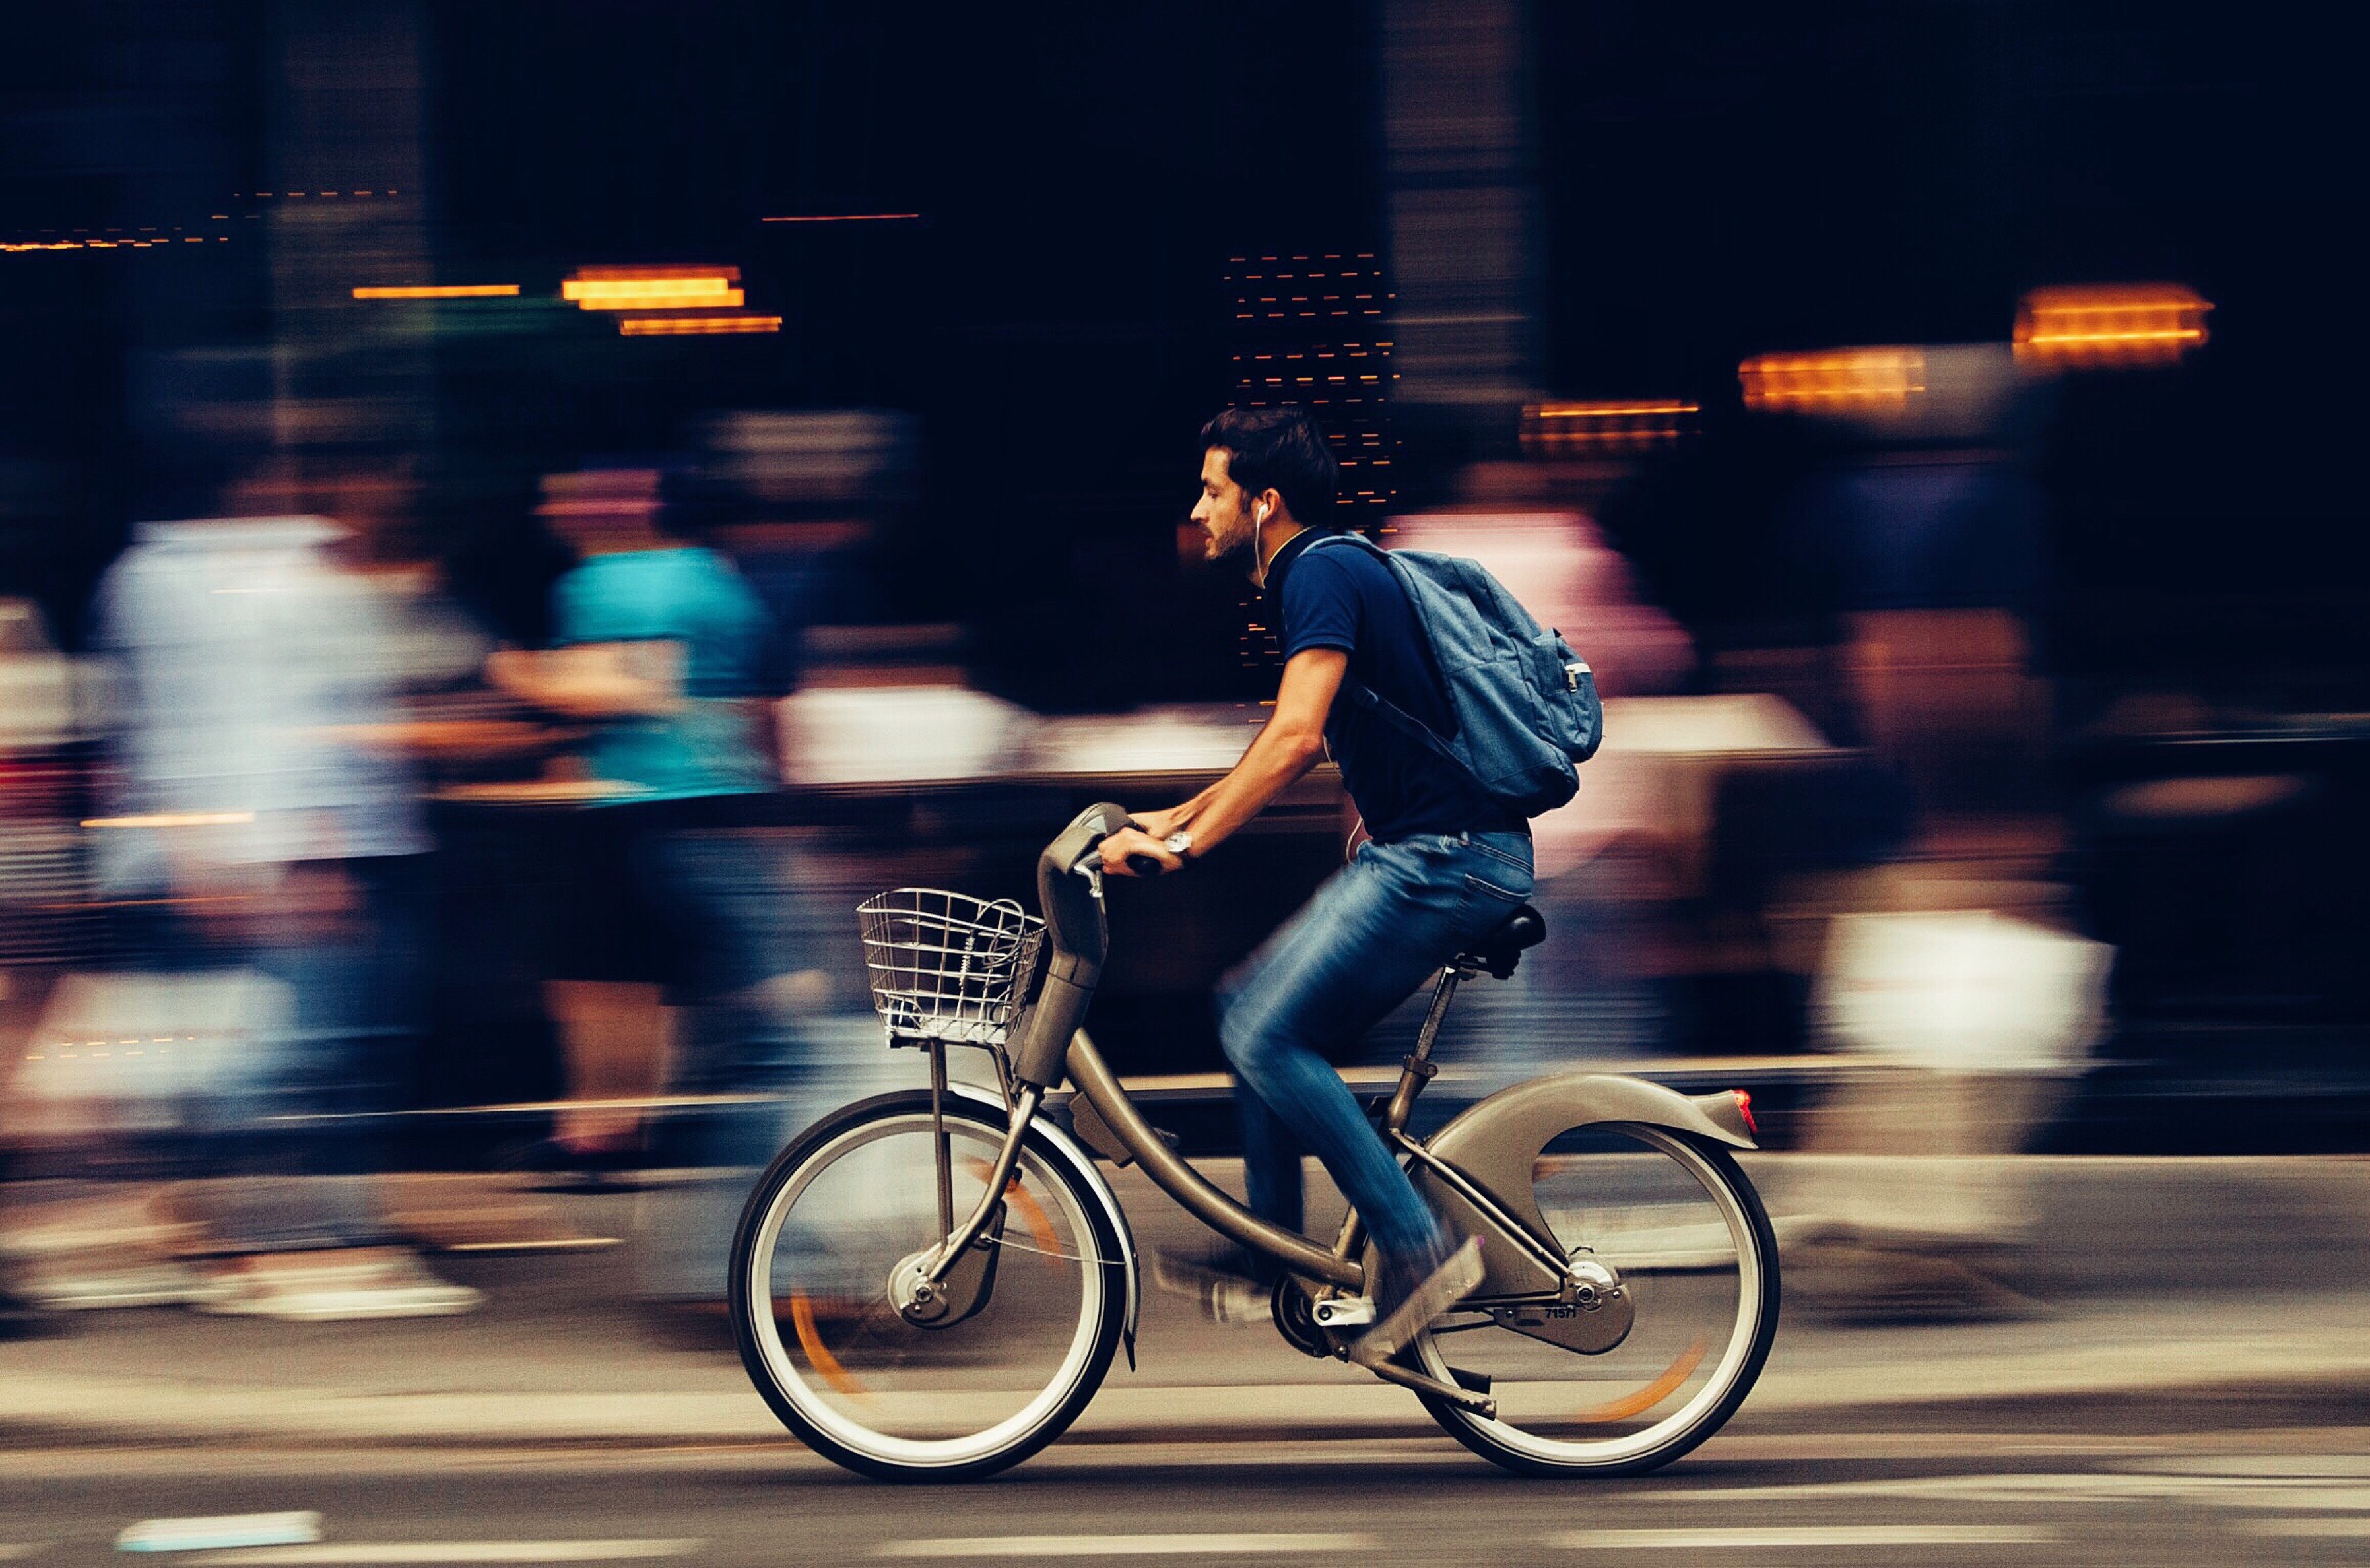 https://www.pexels.com/photo/man-riding-bicycle-on-city-street-310983/